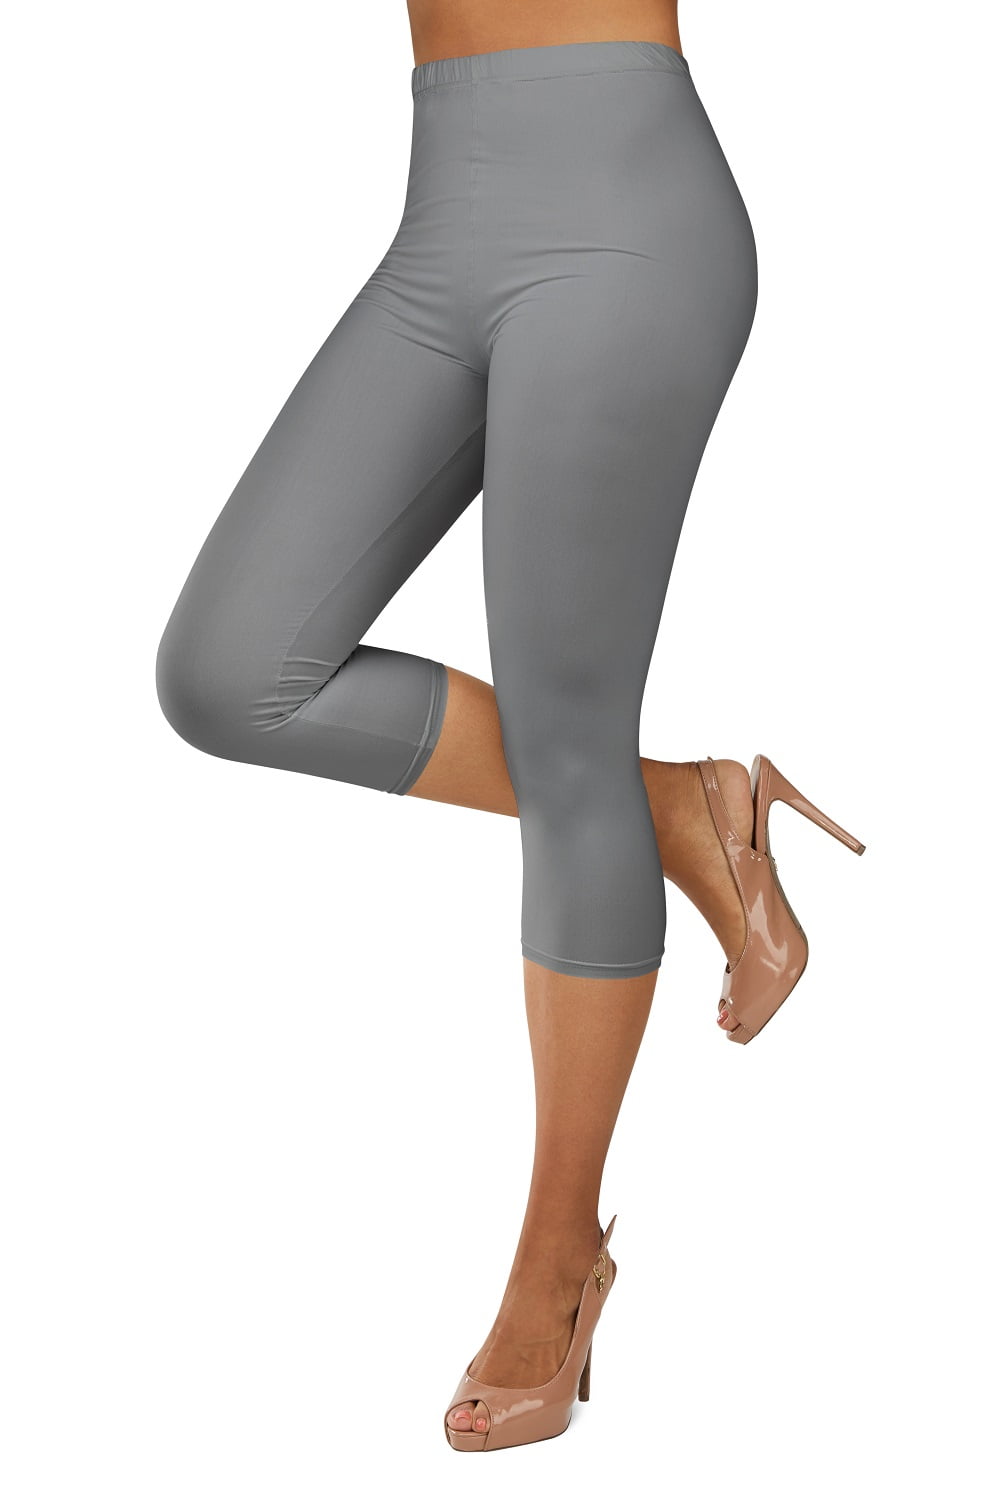 Gilbin Ultra Soft Capri High Waist Leggings for Women-Many Colors -One Size  & Plus Size (Brown S-L)